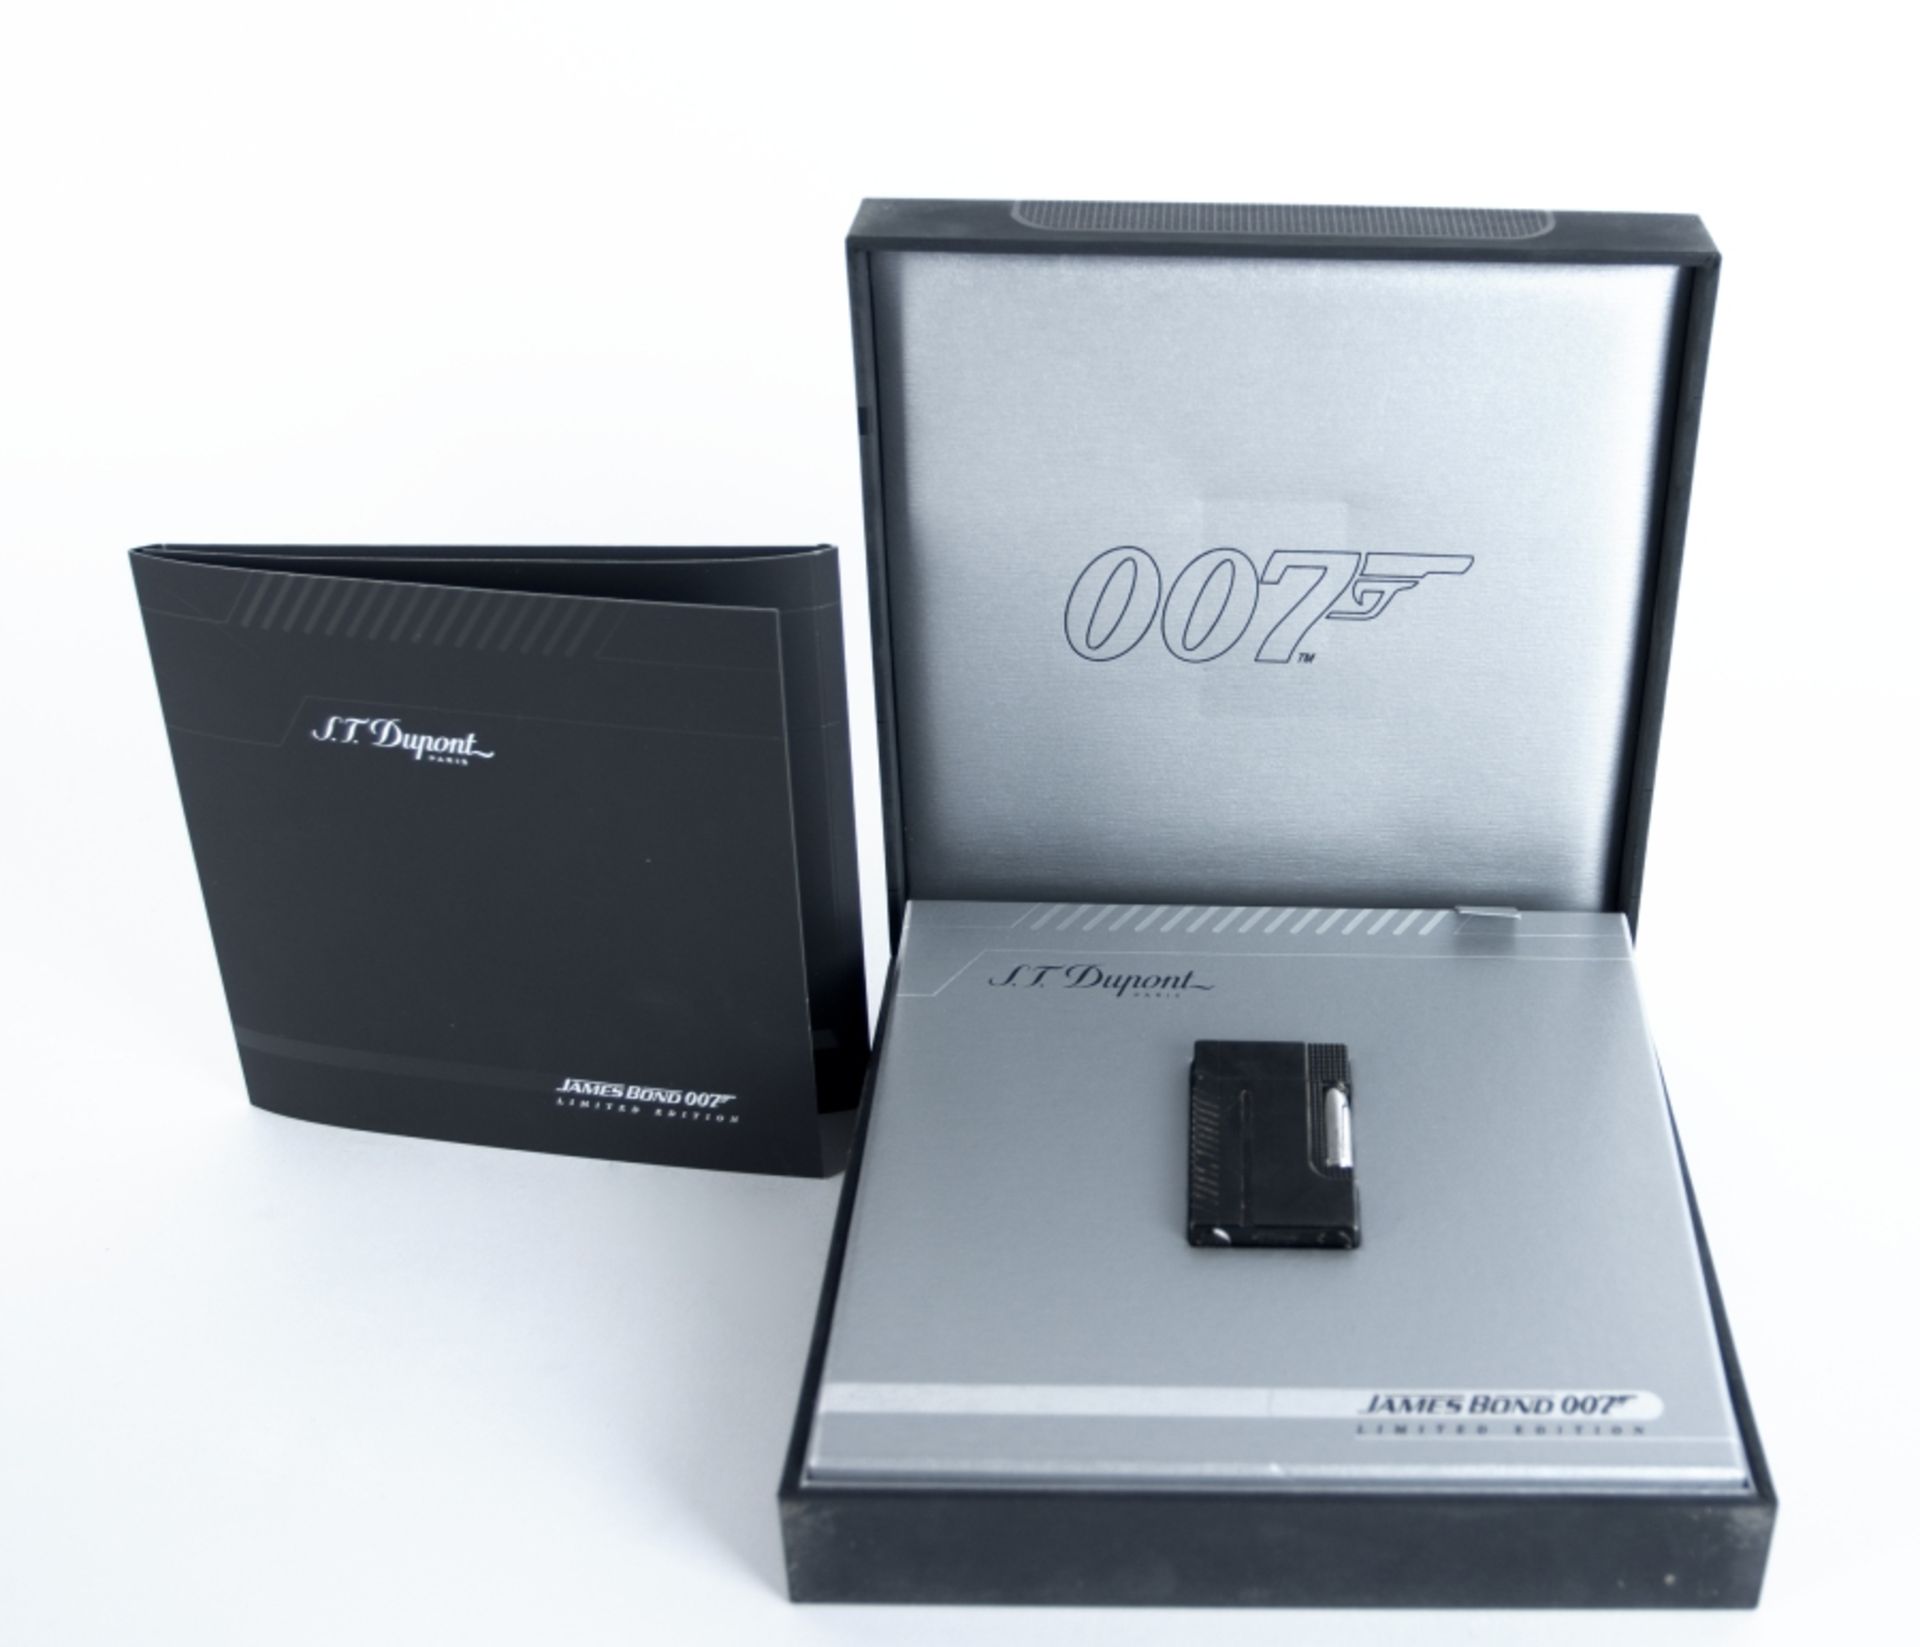 Dupont, S. T.:  James Bond 007 Limited Edition Feuerzeug - Image 3 of 3